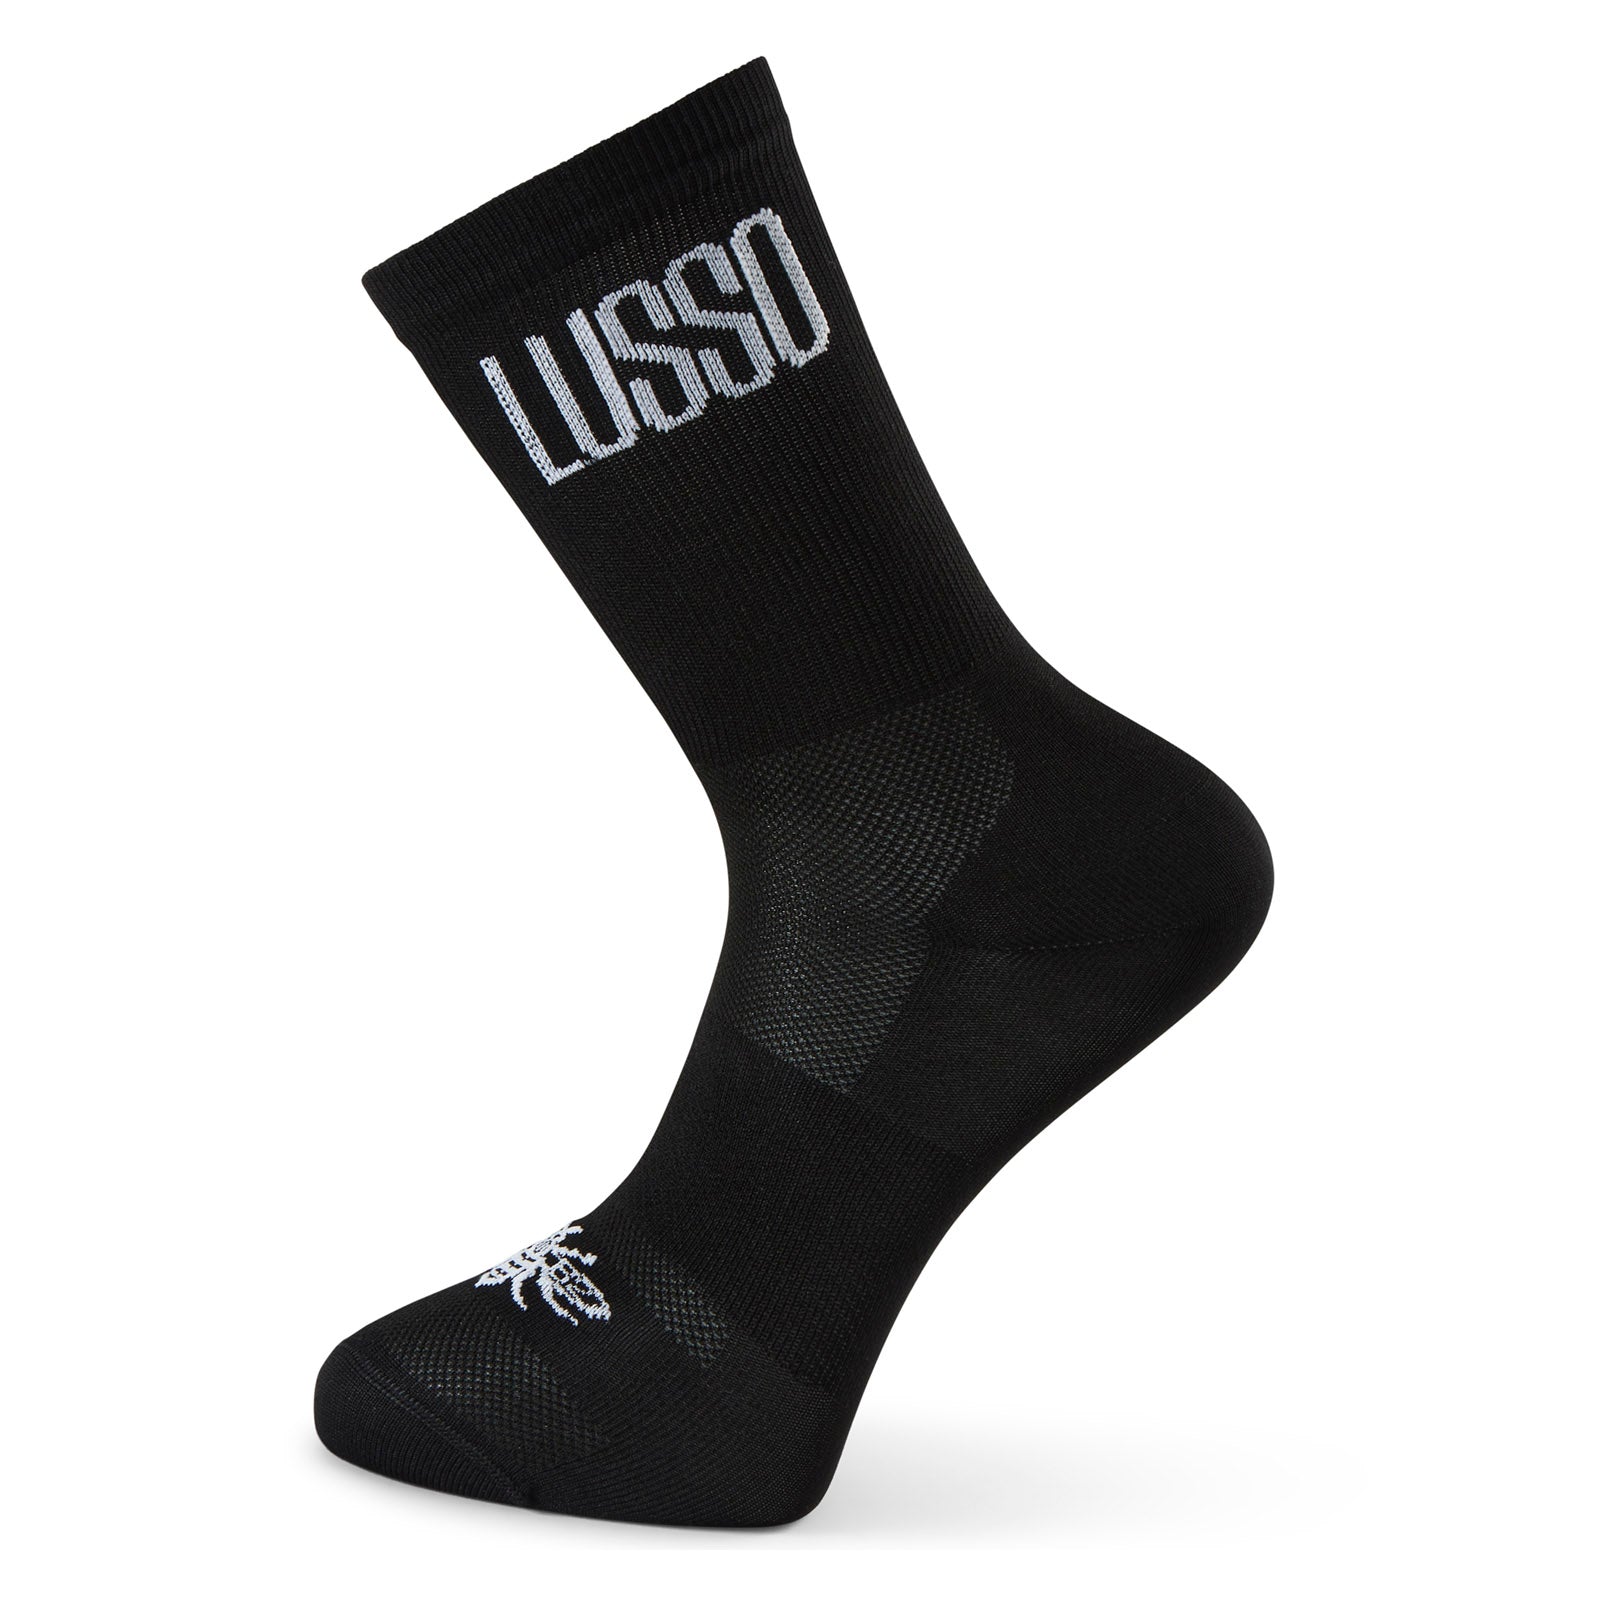 Paragon Accessories Bundle (black socks)- save 20% - Lusso Cycle Wear